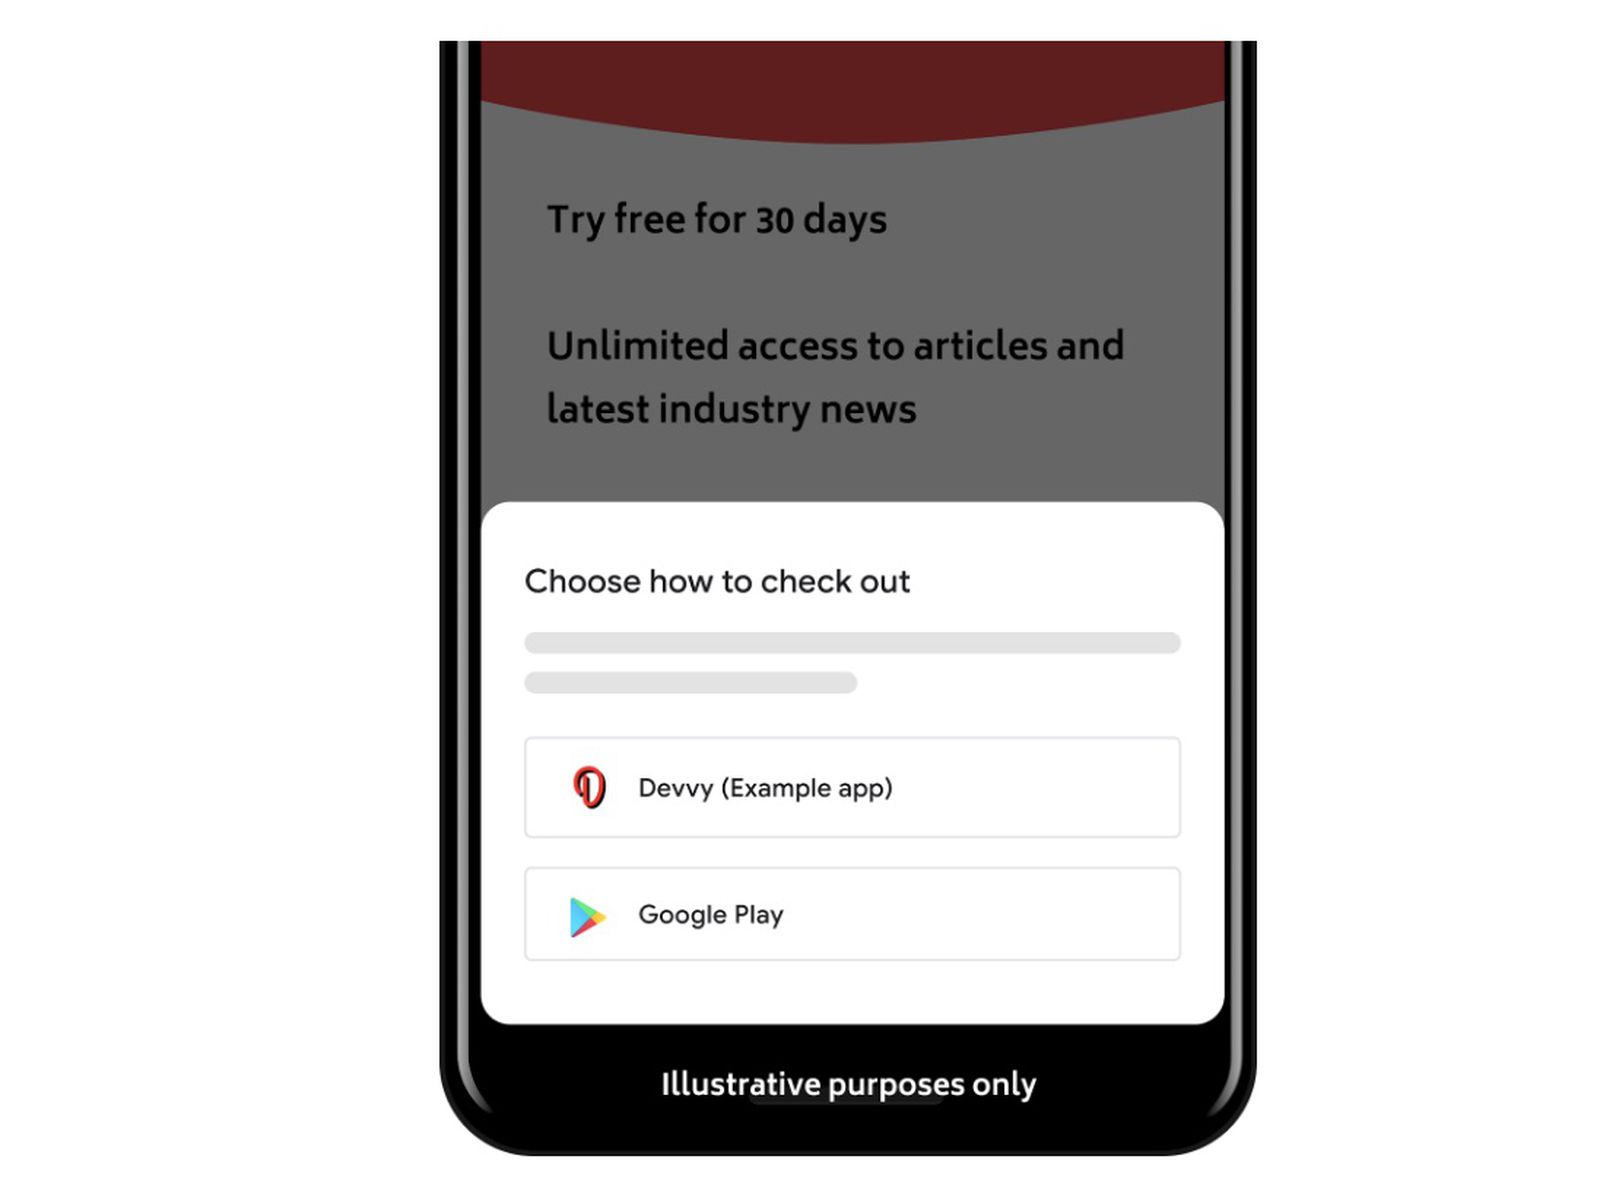 Google allows alternative to Google Play billing in EU